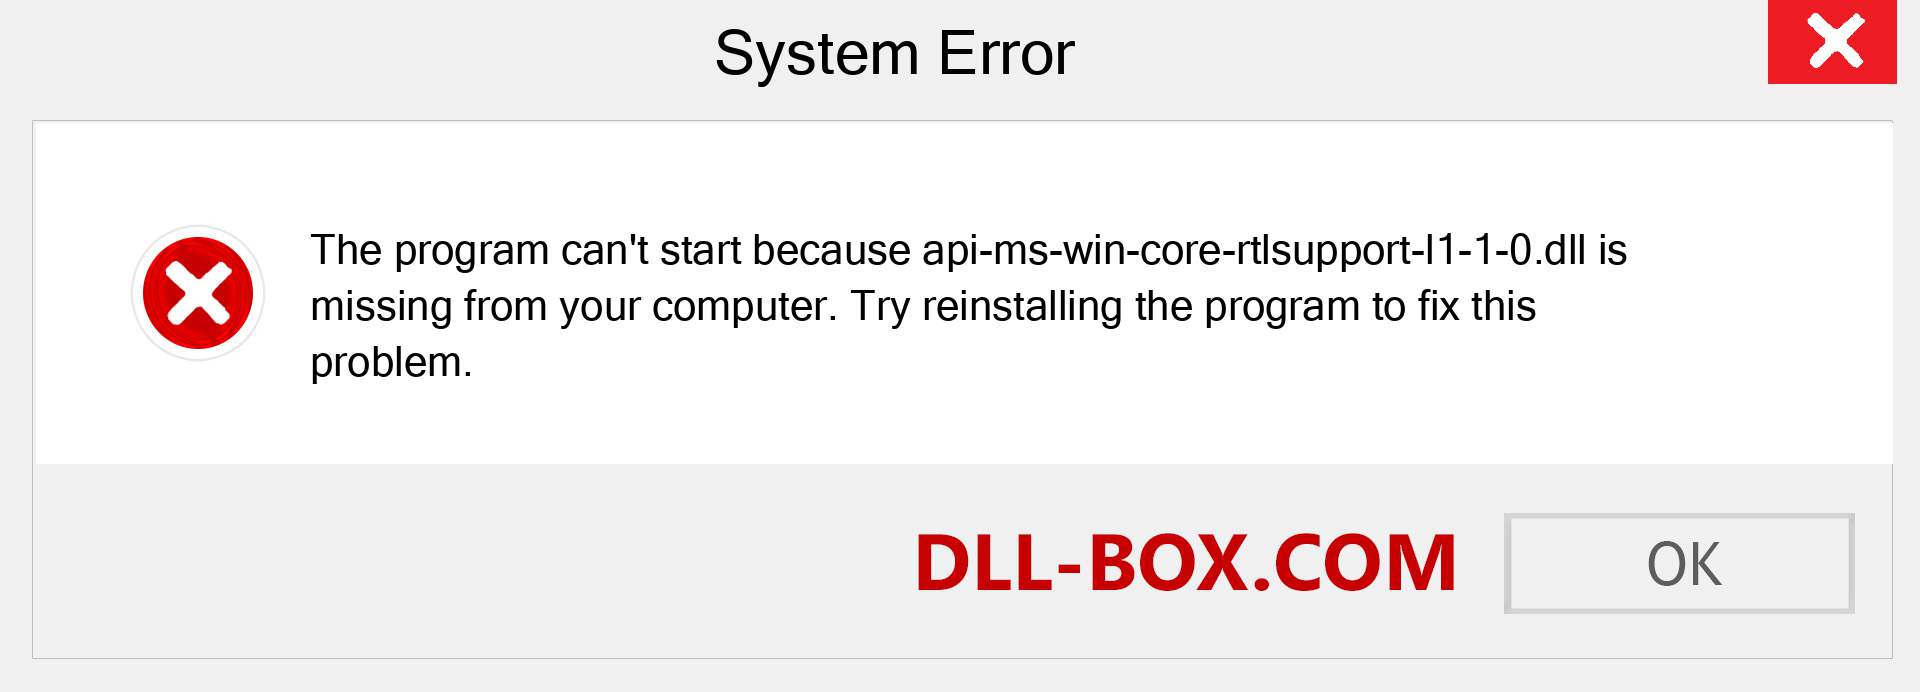  api-ms-win-core-rtlsupport-l1-1-0.dll file is missing?. Download for Windows 7, 8, 10 - Fix  api-ms-win-core-rtlsupport-l1-1-0 dll Missing Error on Windows, photos, images